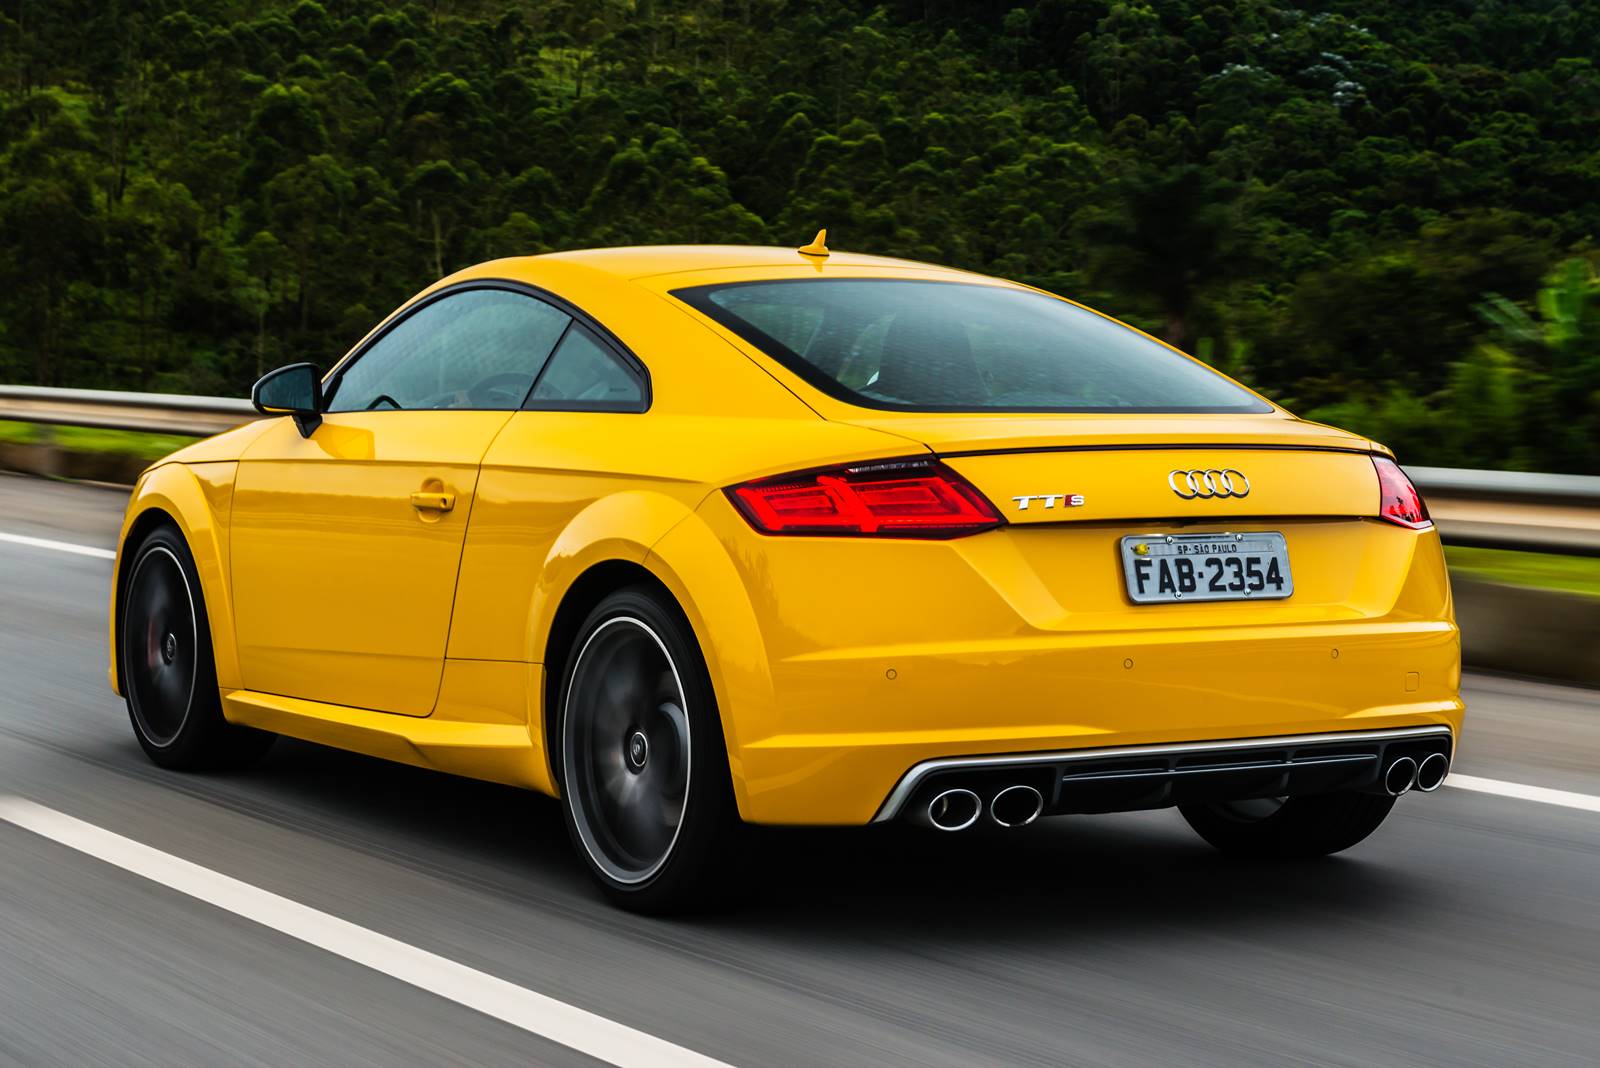 Audi TTS tabela fipe